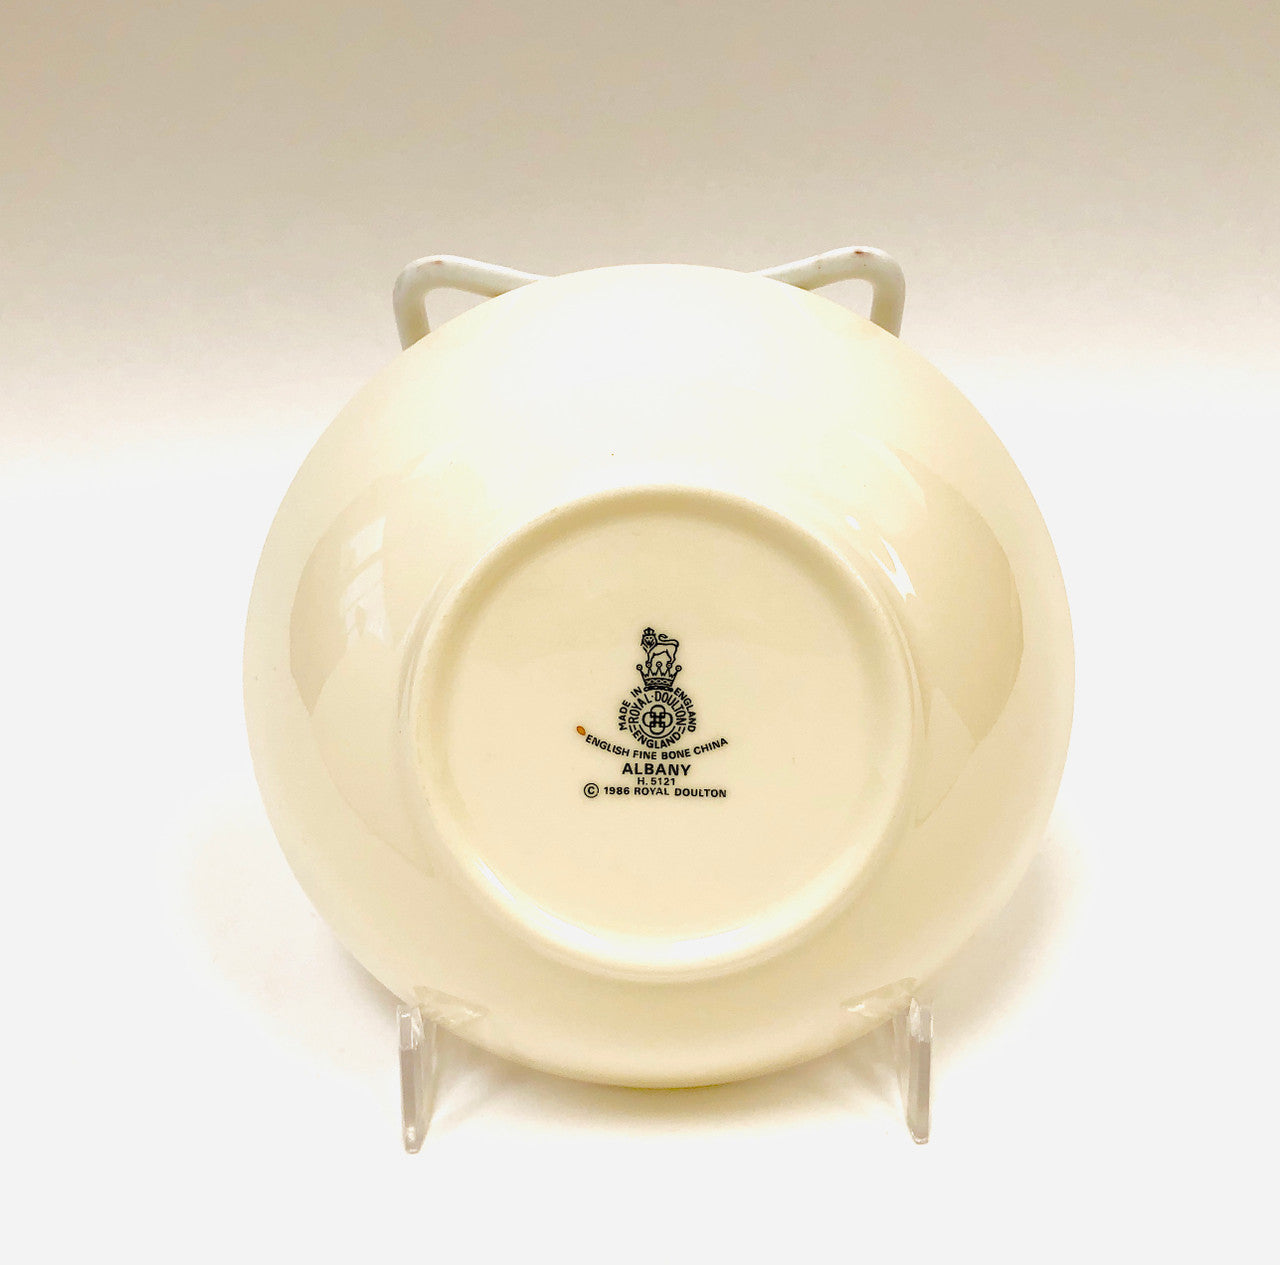 Royal Doulton, Albany, Nappie Bowl, Dessert or Fruit Bowl, Vintage, Fine Bone China, Ceramic, England